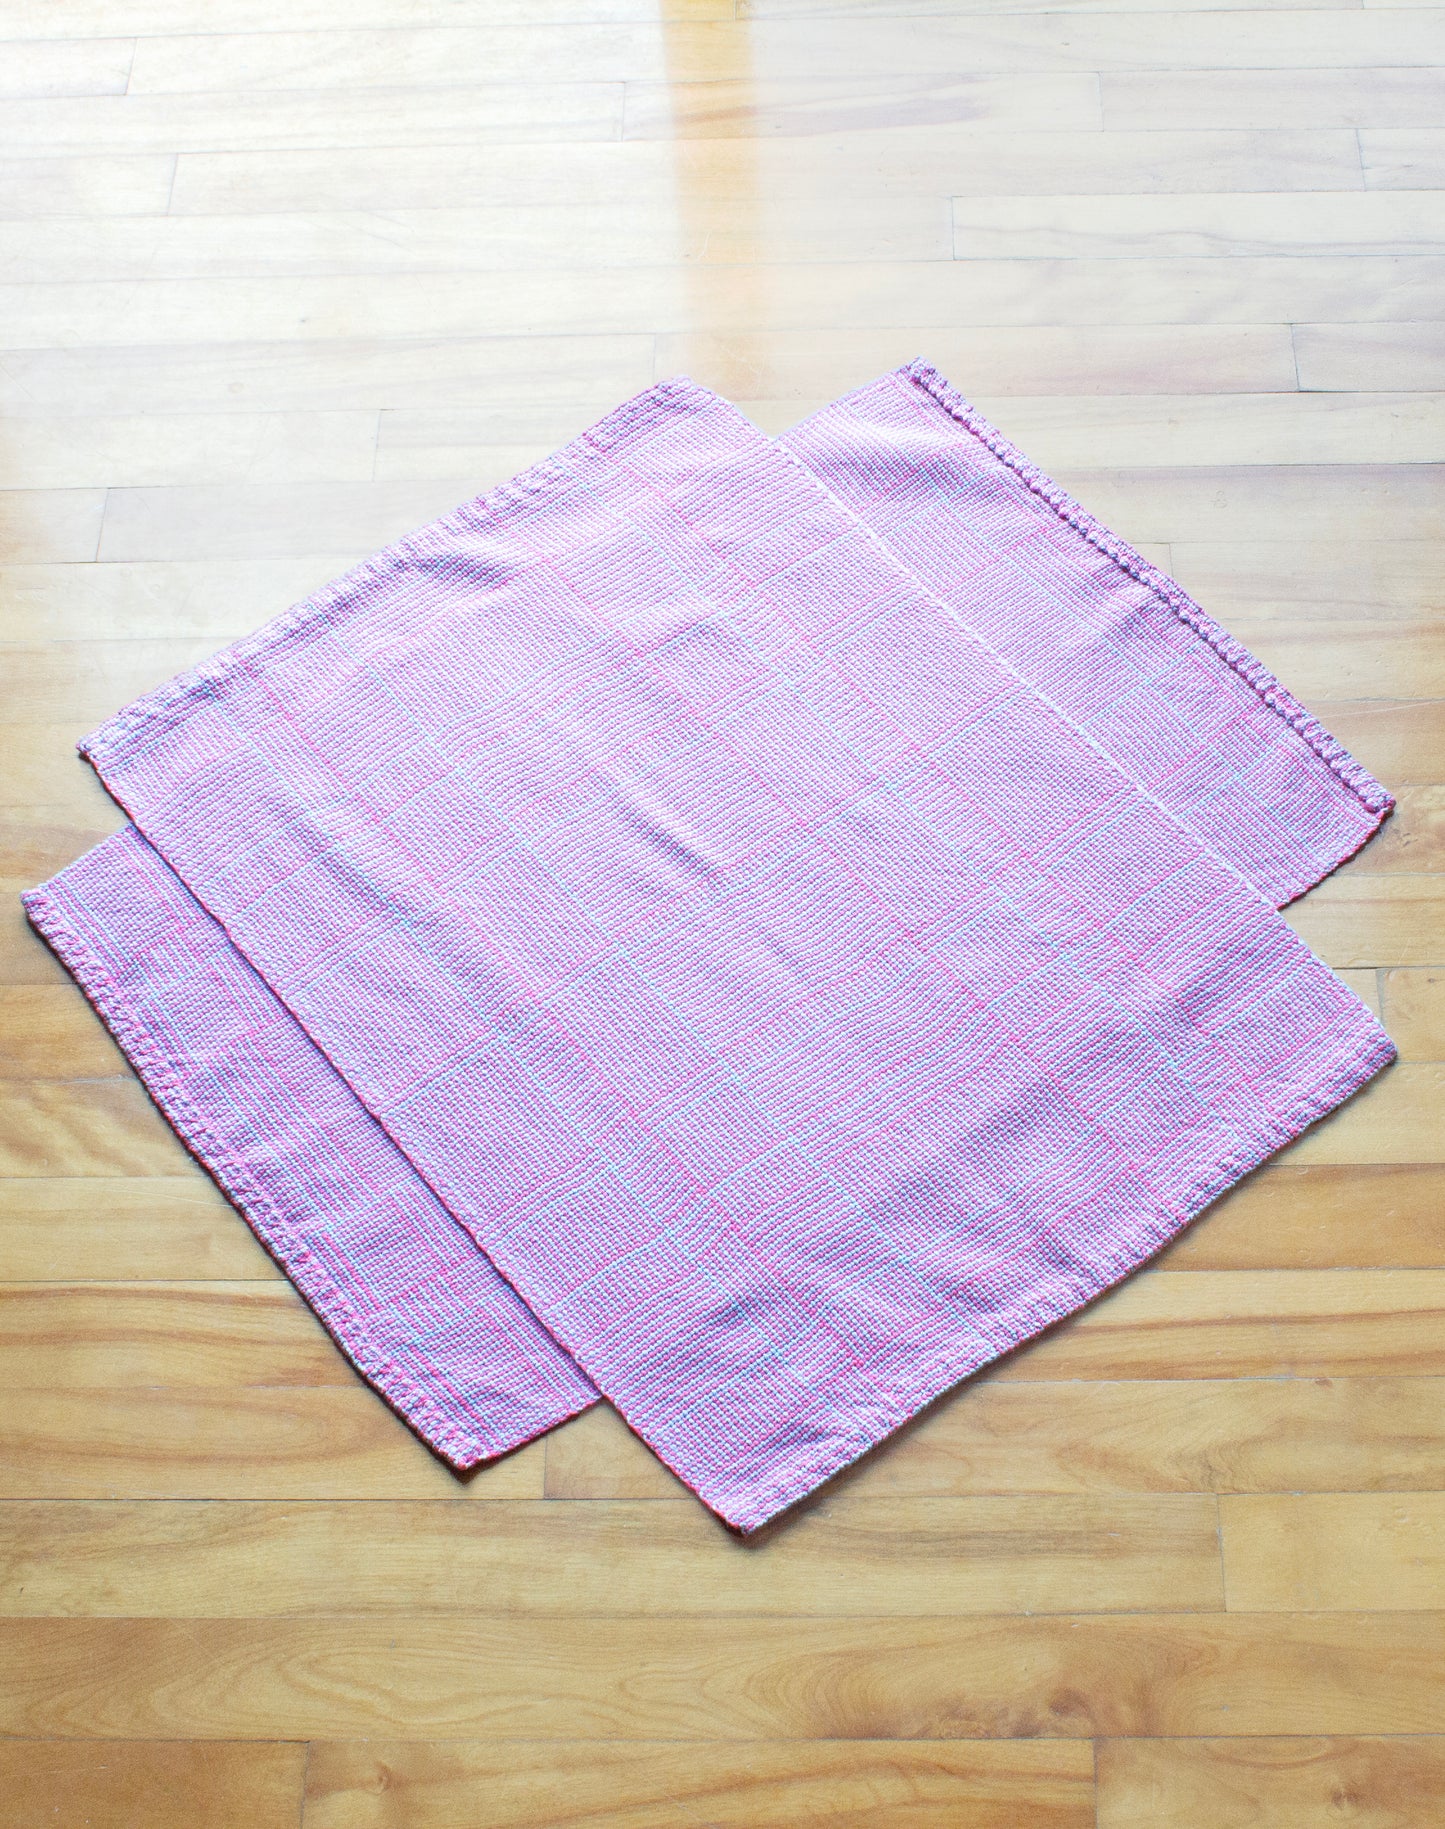 Cotton dish towel, pink log cabin patterned, blue, handmade, natural fibres, washer and dryer safe, hemmed, hand sewn hem, made in Canada